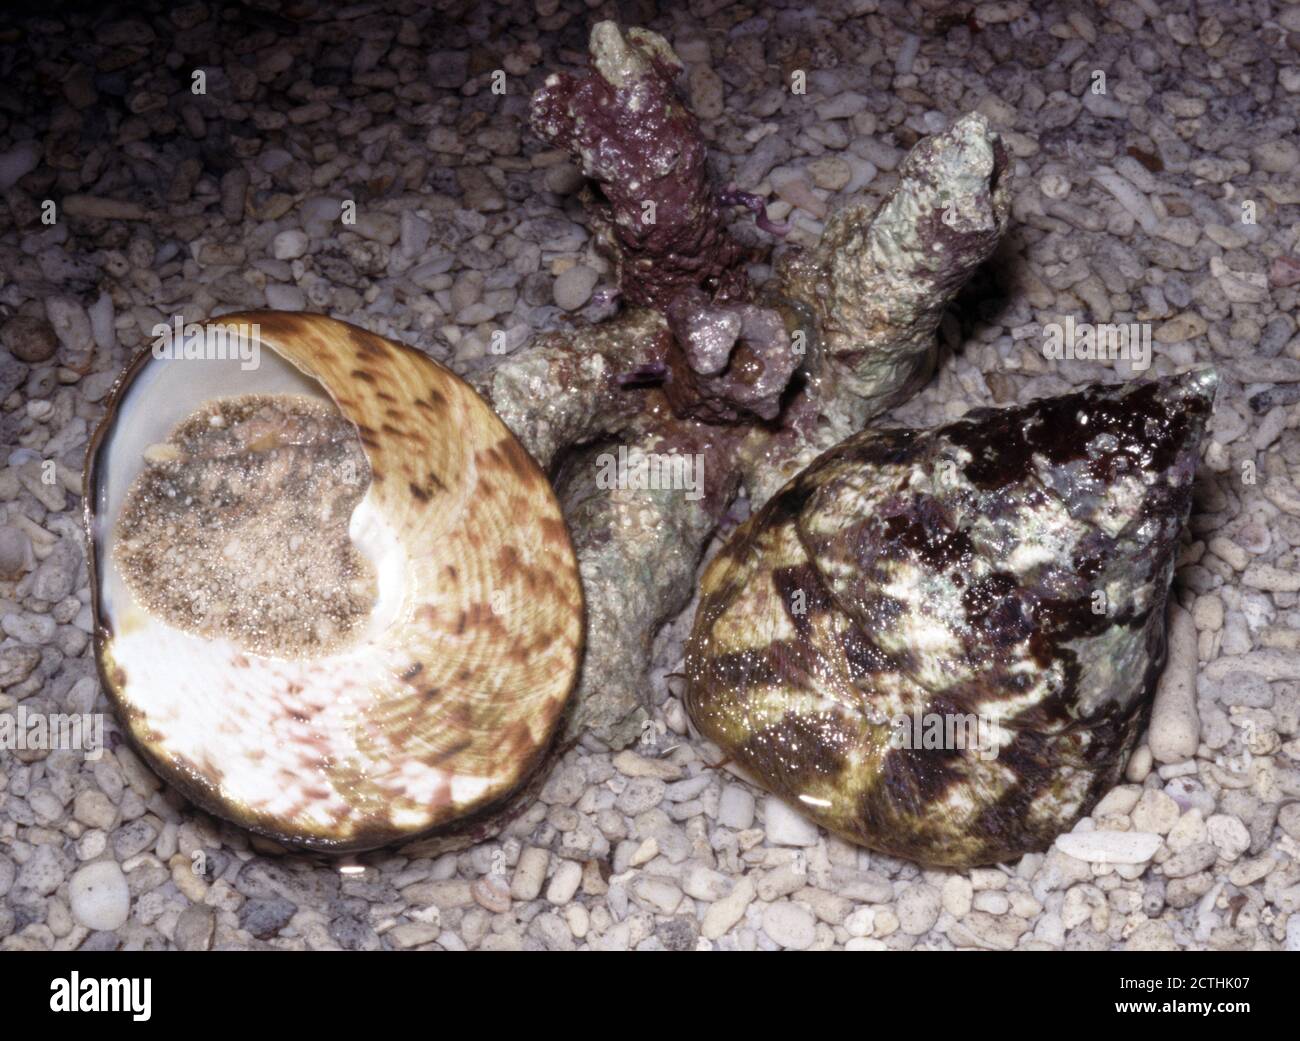 Banded trochus snail, Trochus histrio Stock Photo